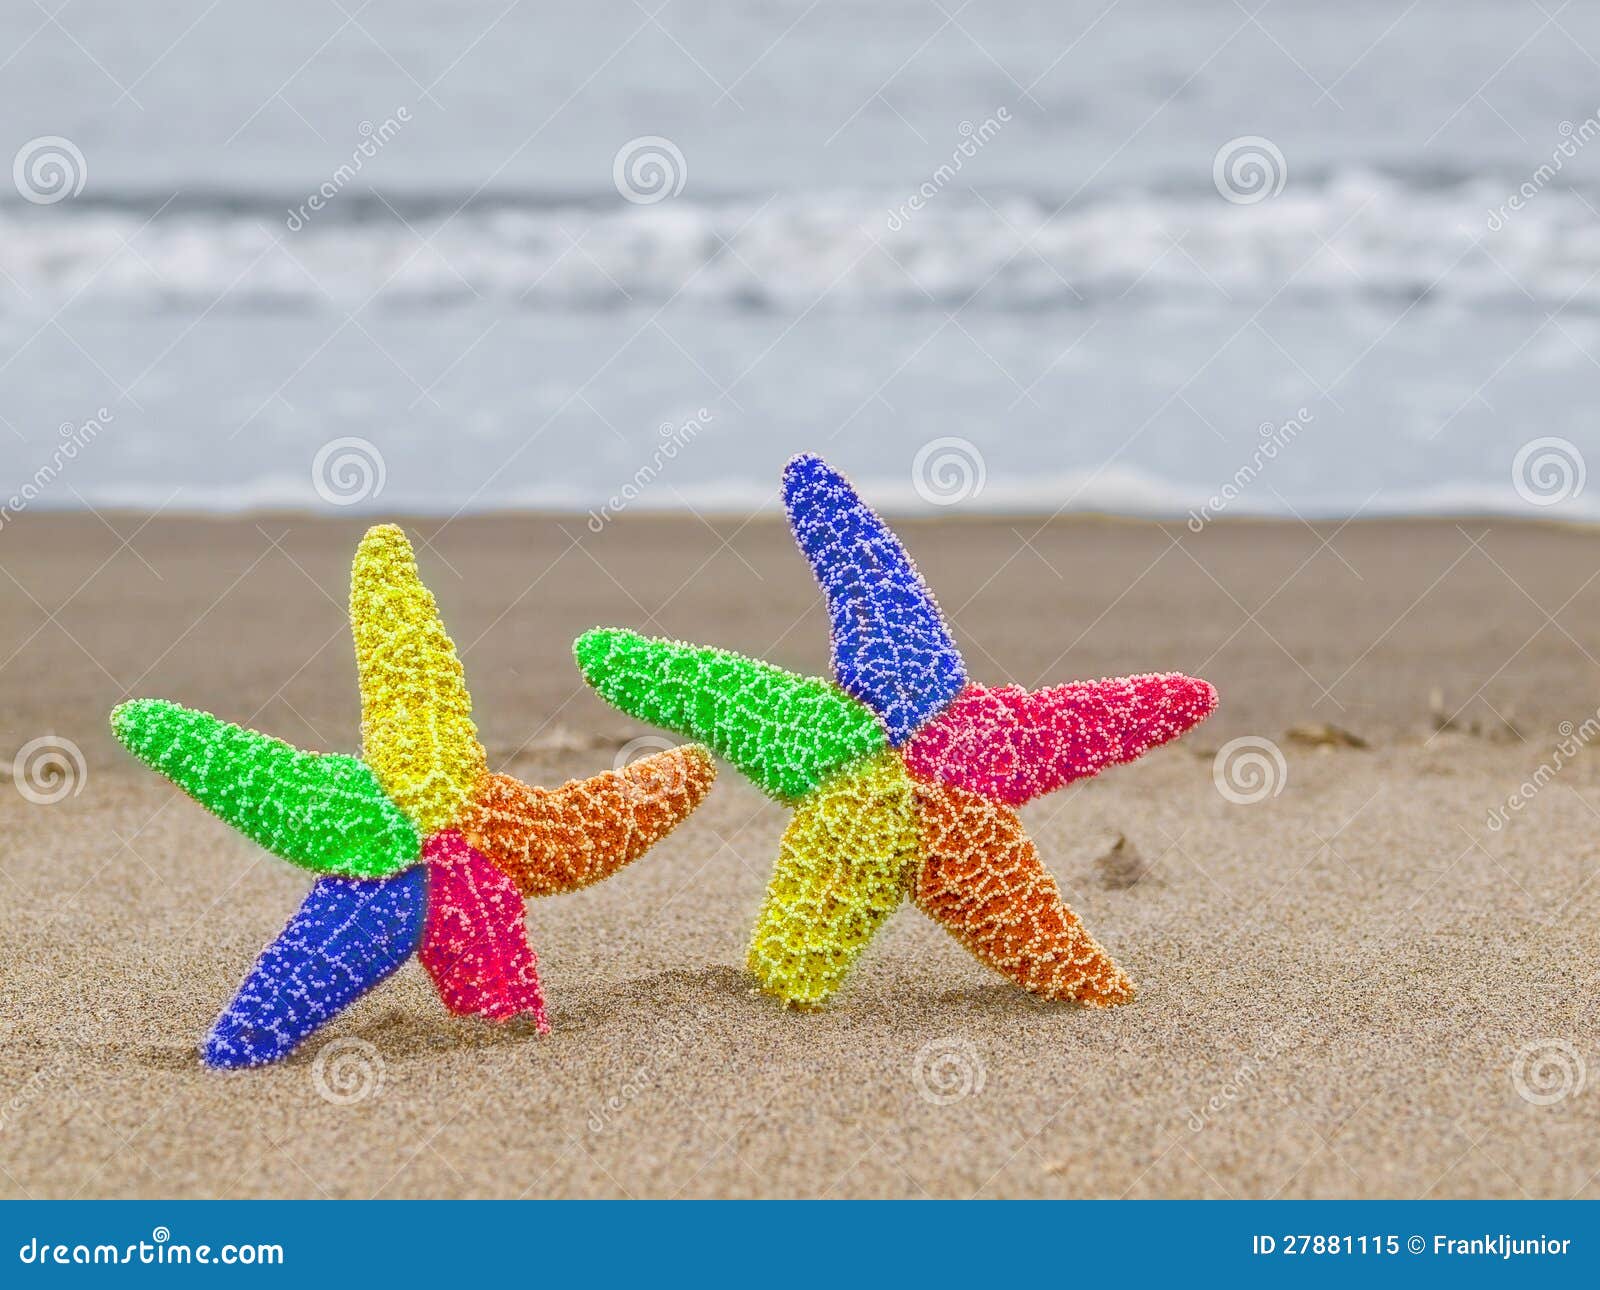 Two Rainbow Starfish on the Shoreline Stock Image - Image of